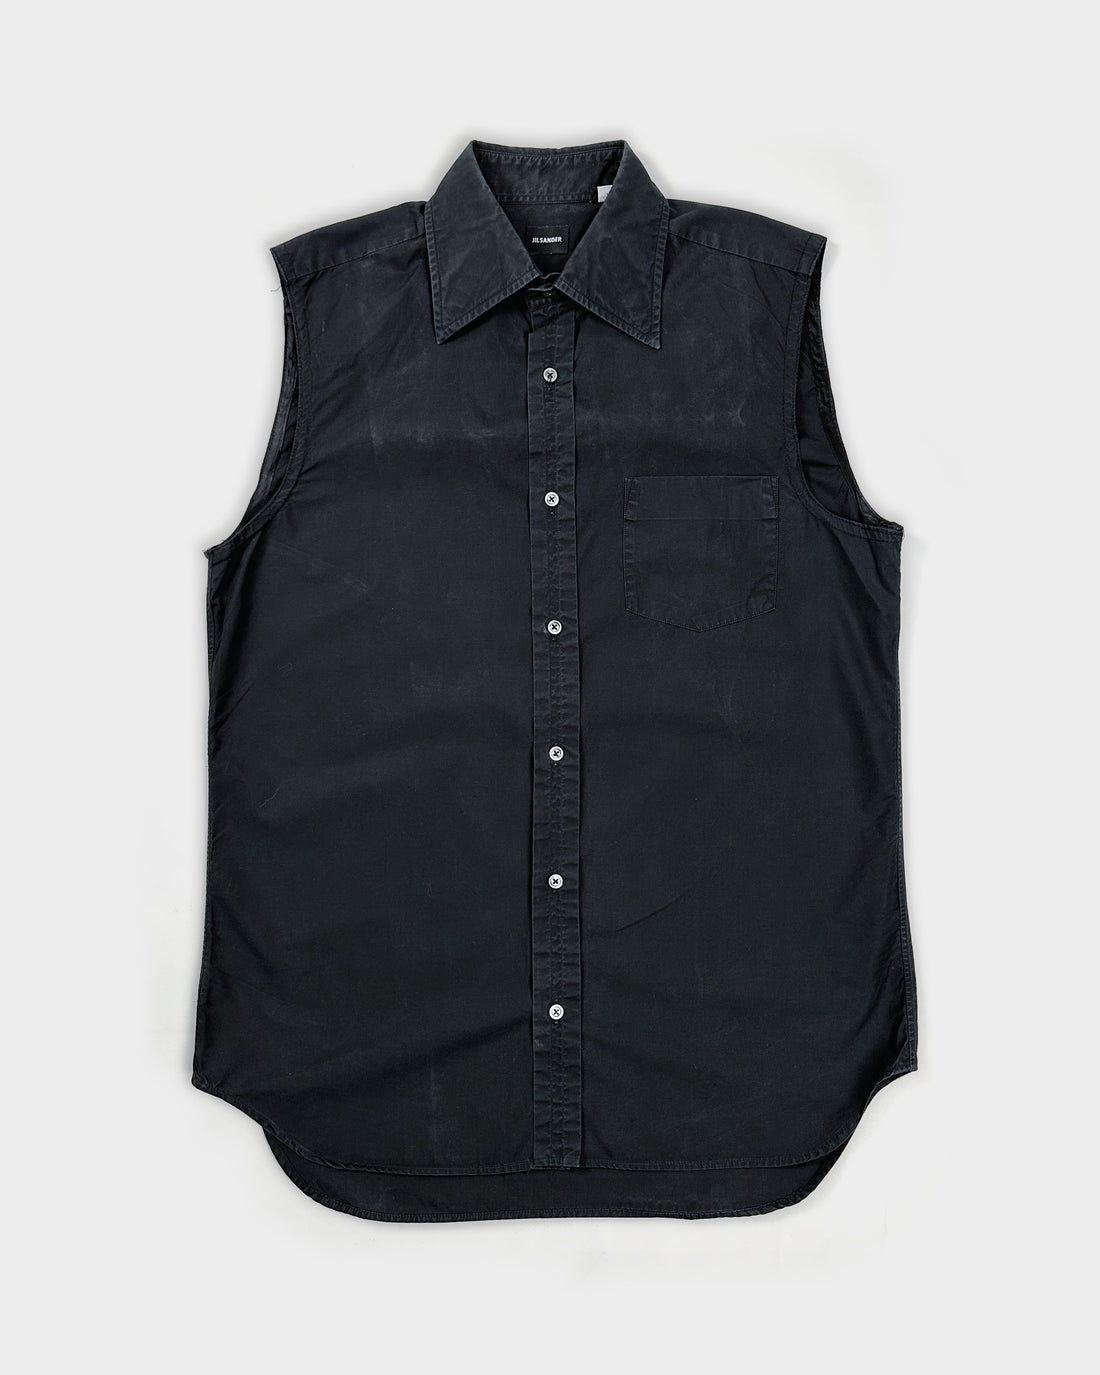 Jil Sander Sleveless Black Shirt 2000's